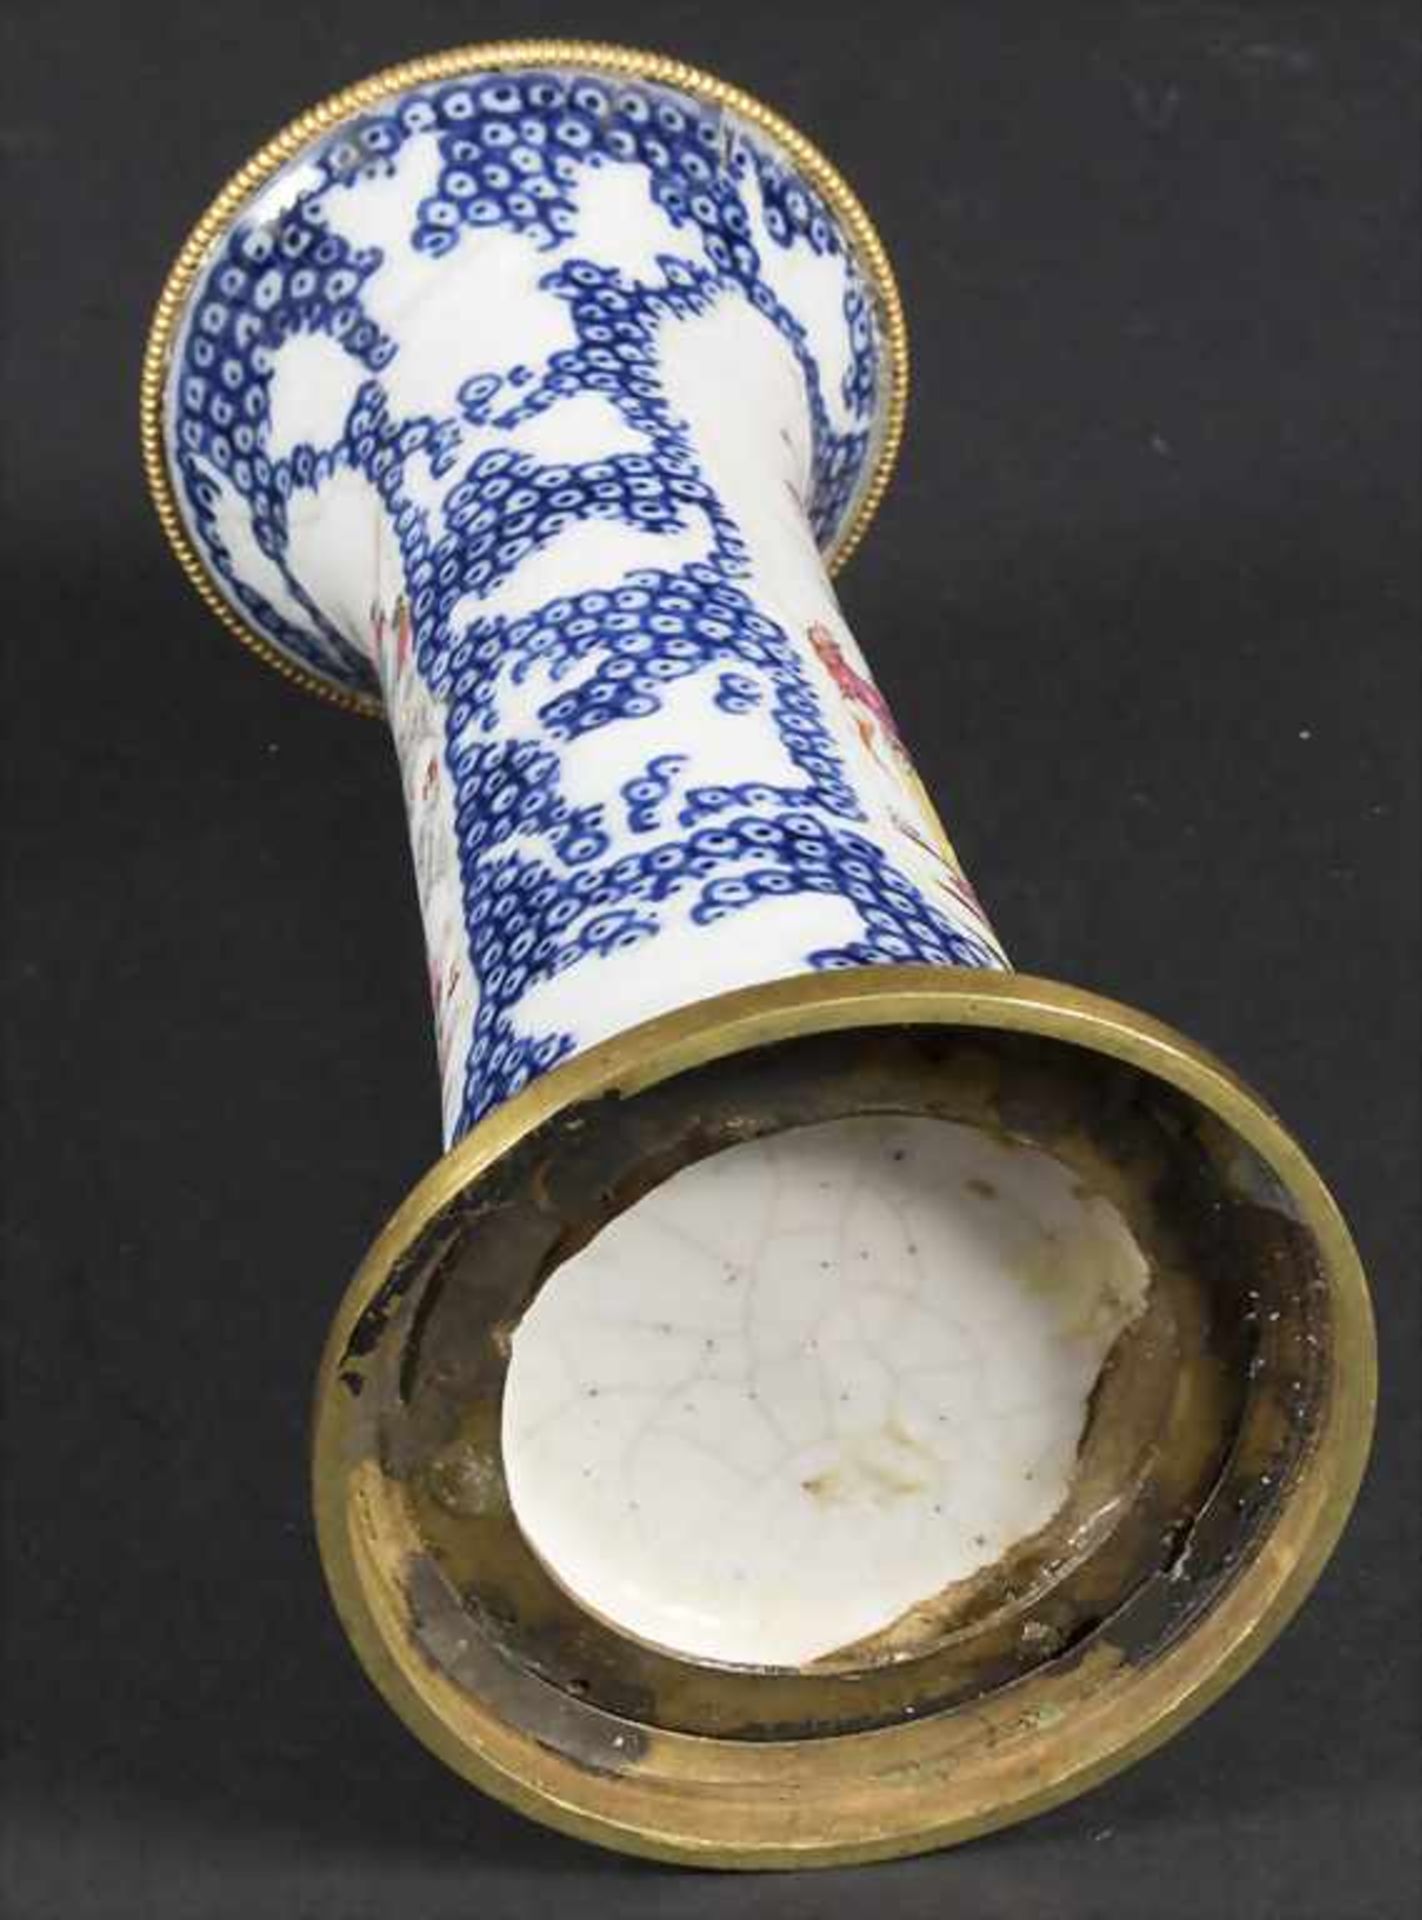 Ziervase / A decorative porcelain vase, China, Qing Dynastie (1644-1911), 18. Jh. - Image 6 of 9